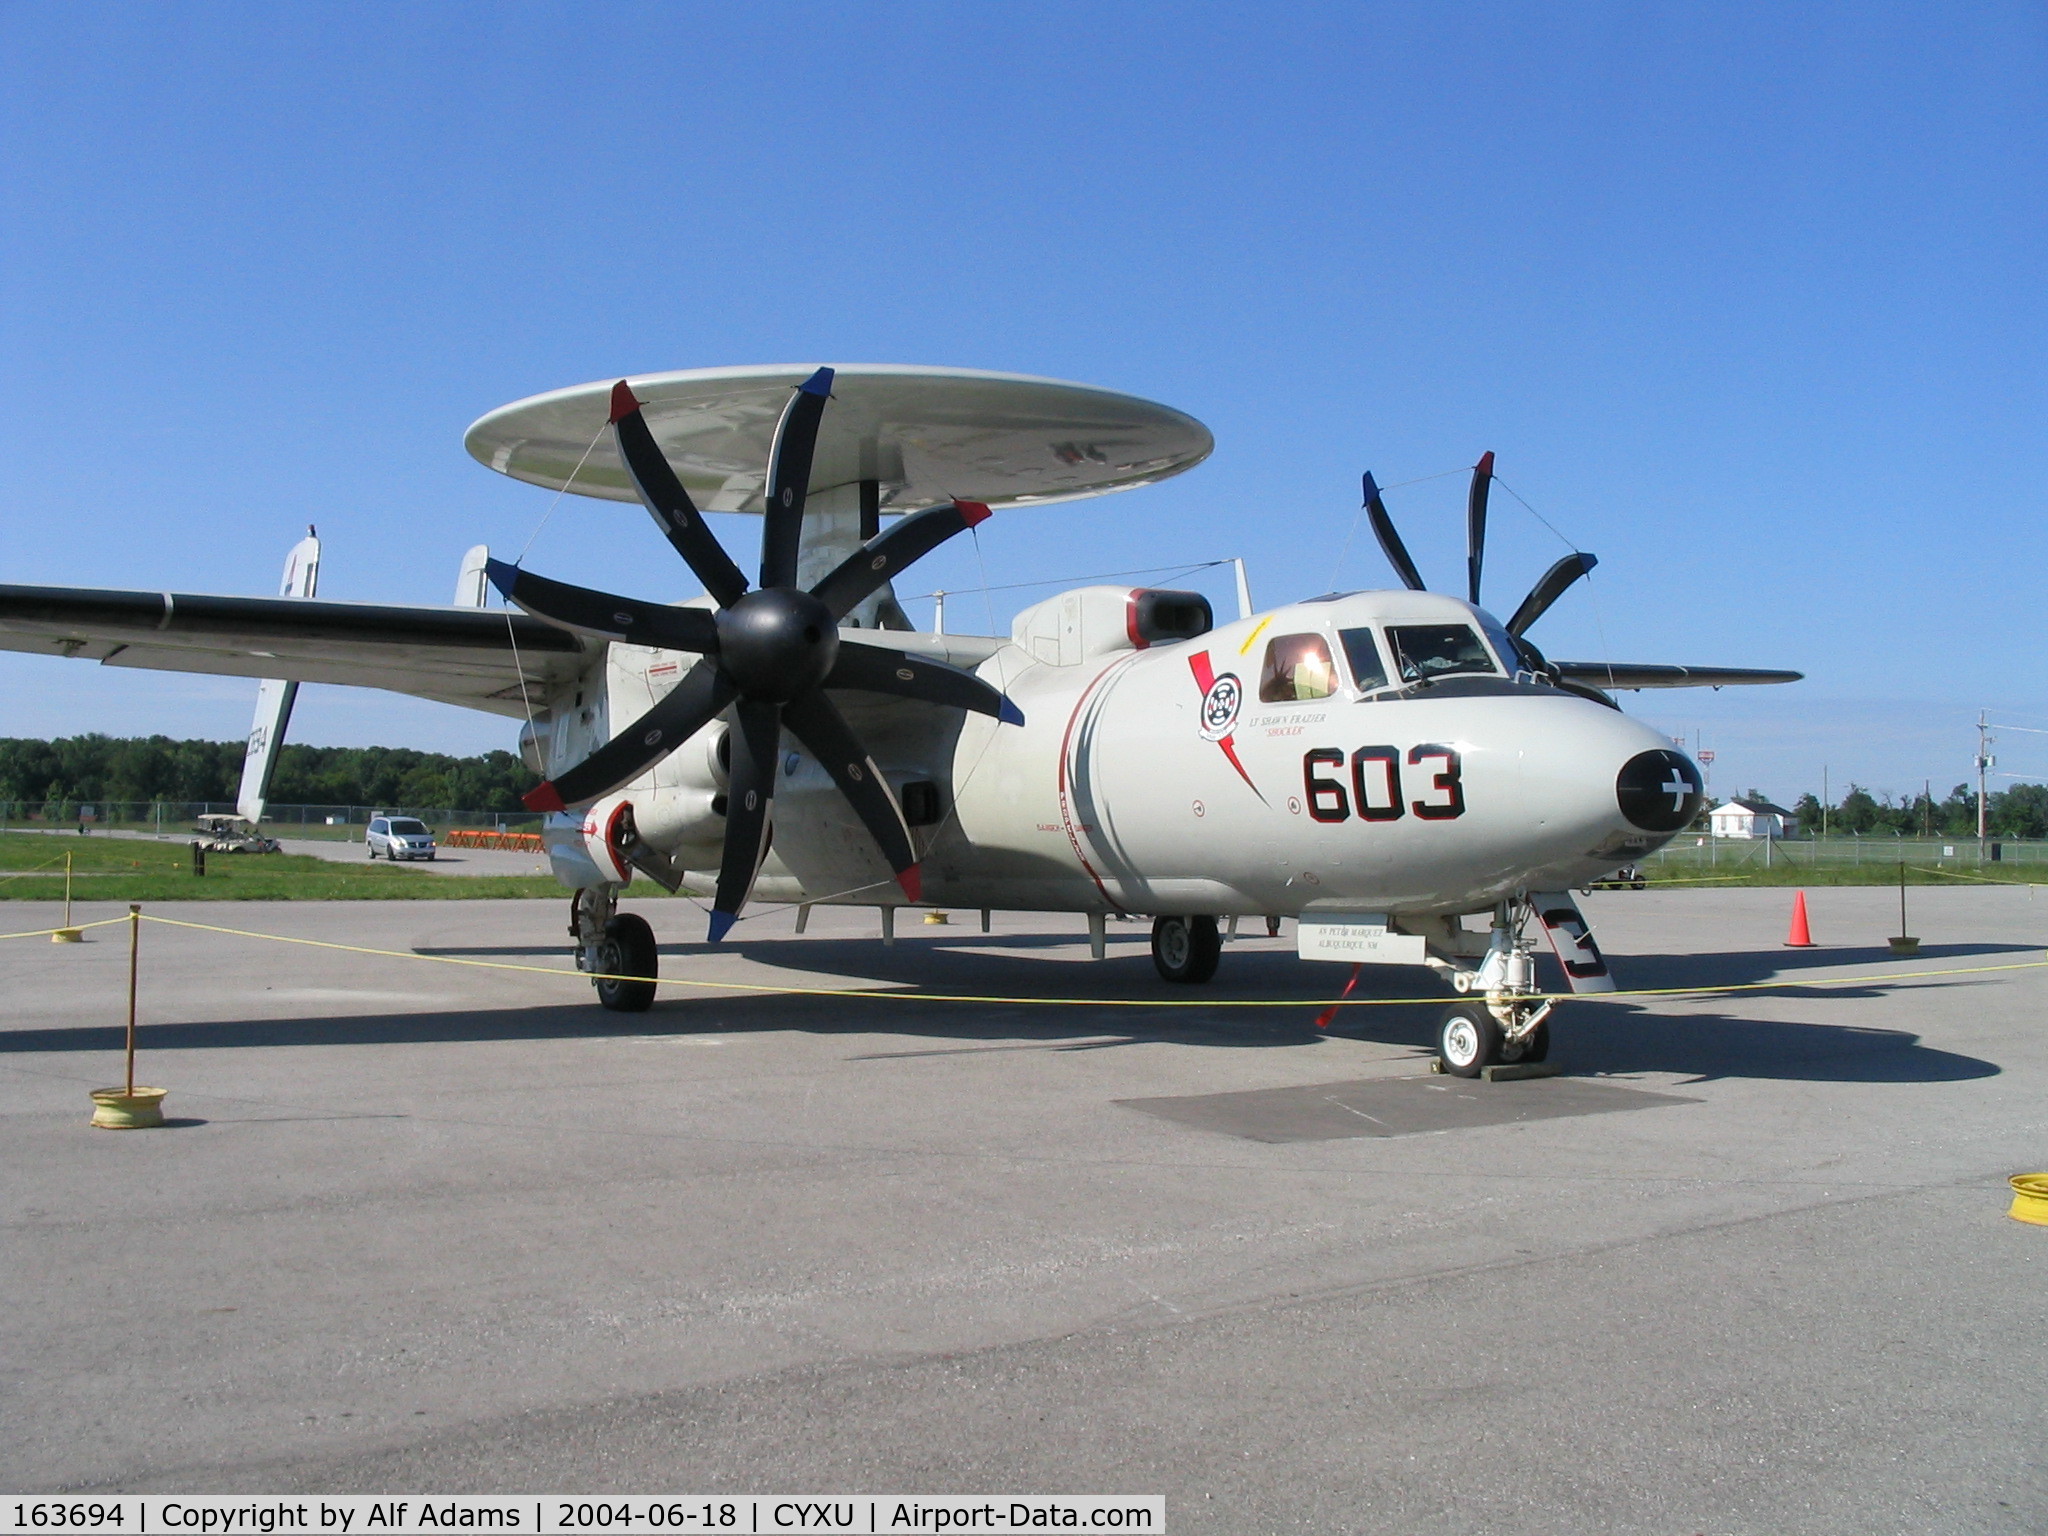 163694, Grumman E-2C Hawkeye 2000 C/N A134, Displayed at the airshow at London, Ontario, Canada in 2004.